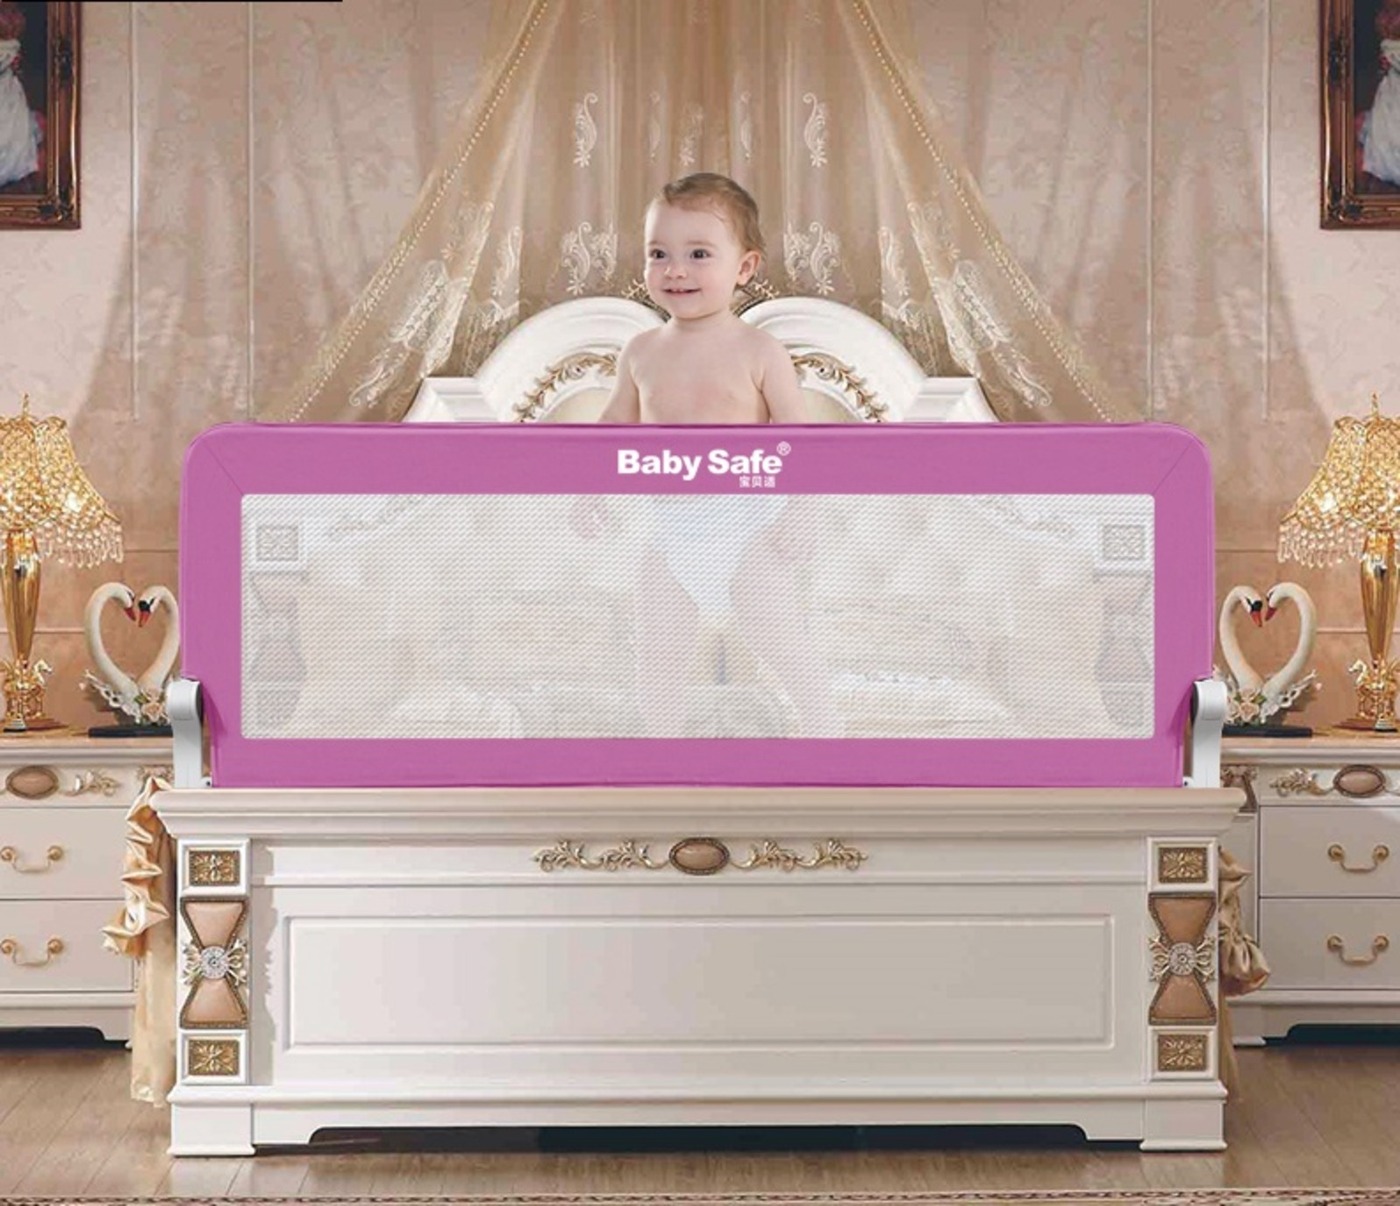 Baby safe барьер для кроватки 120х42 см